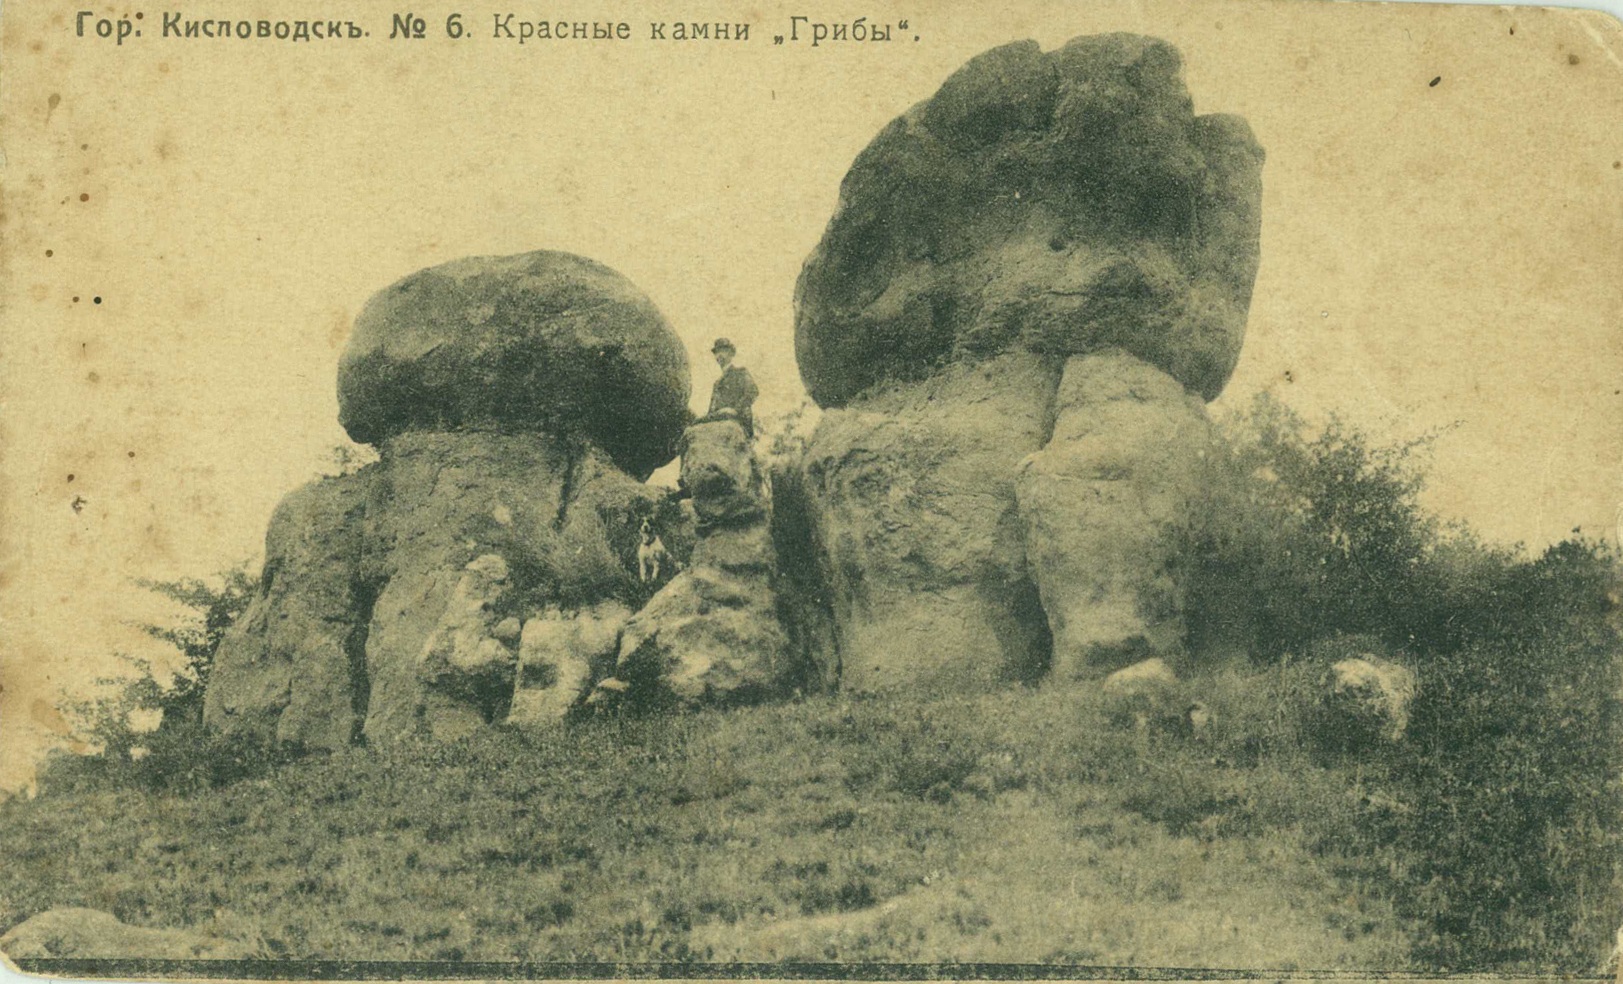 &laquo;Mushroom&raquo; red rocks, Kislovodsk, early 20th century, postcardKonstantin Stavrov archive